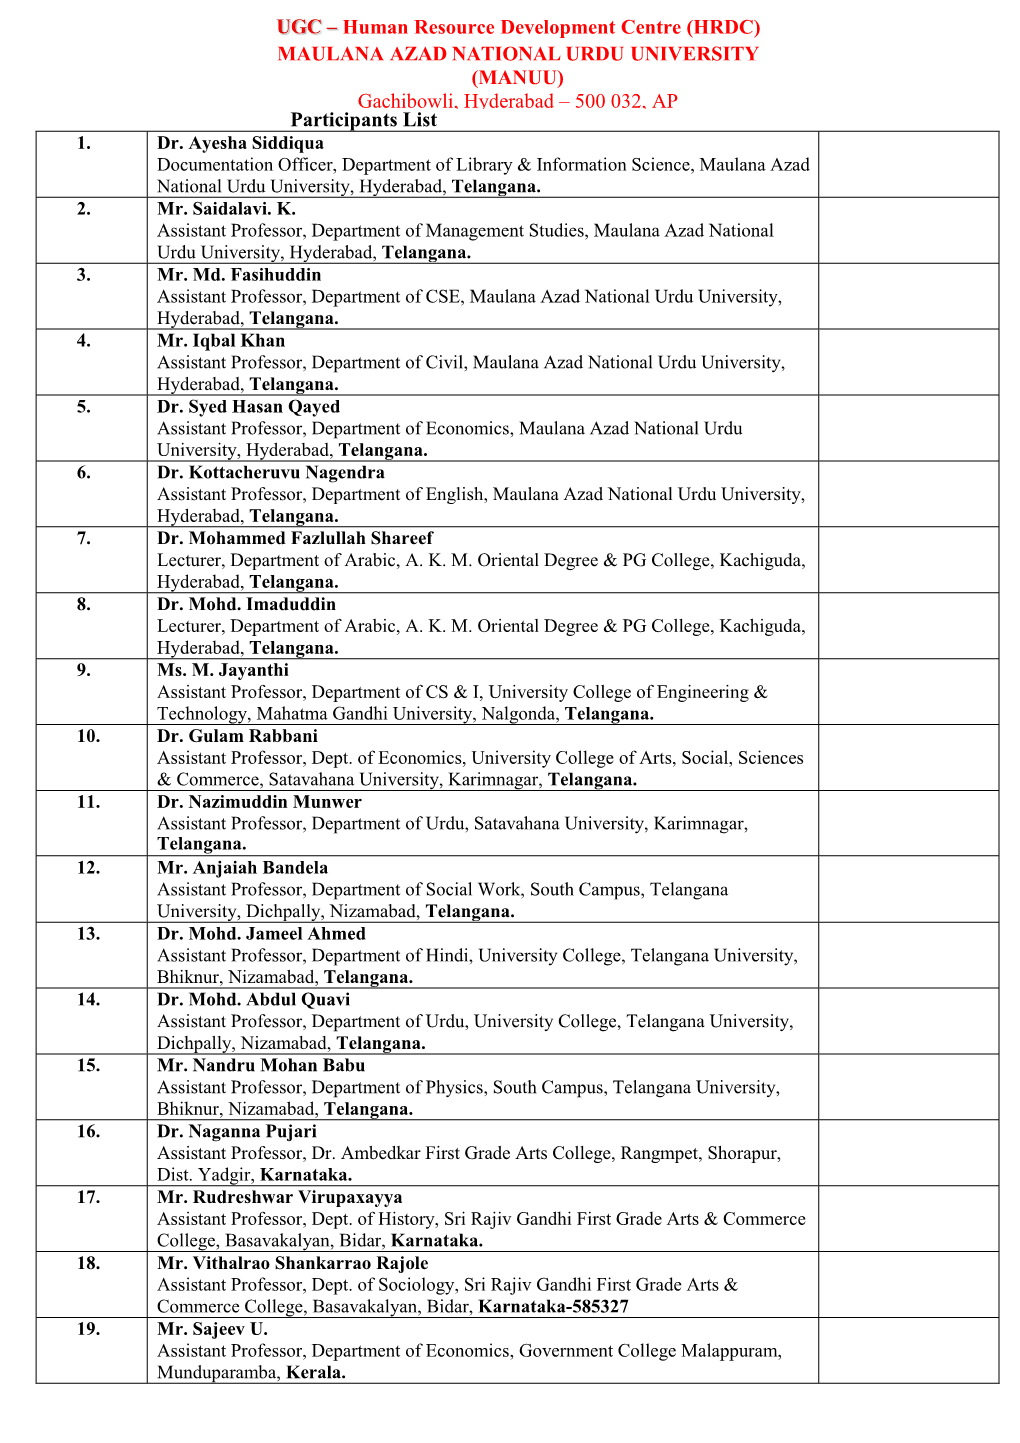 (HRDC) MAULANA AZAD NATIONAL URDU UNIVERSITY (MANUU) Gachibowli, Hyderabad – 500 032, AP Participants List 1